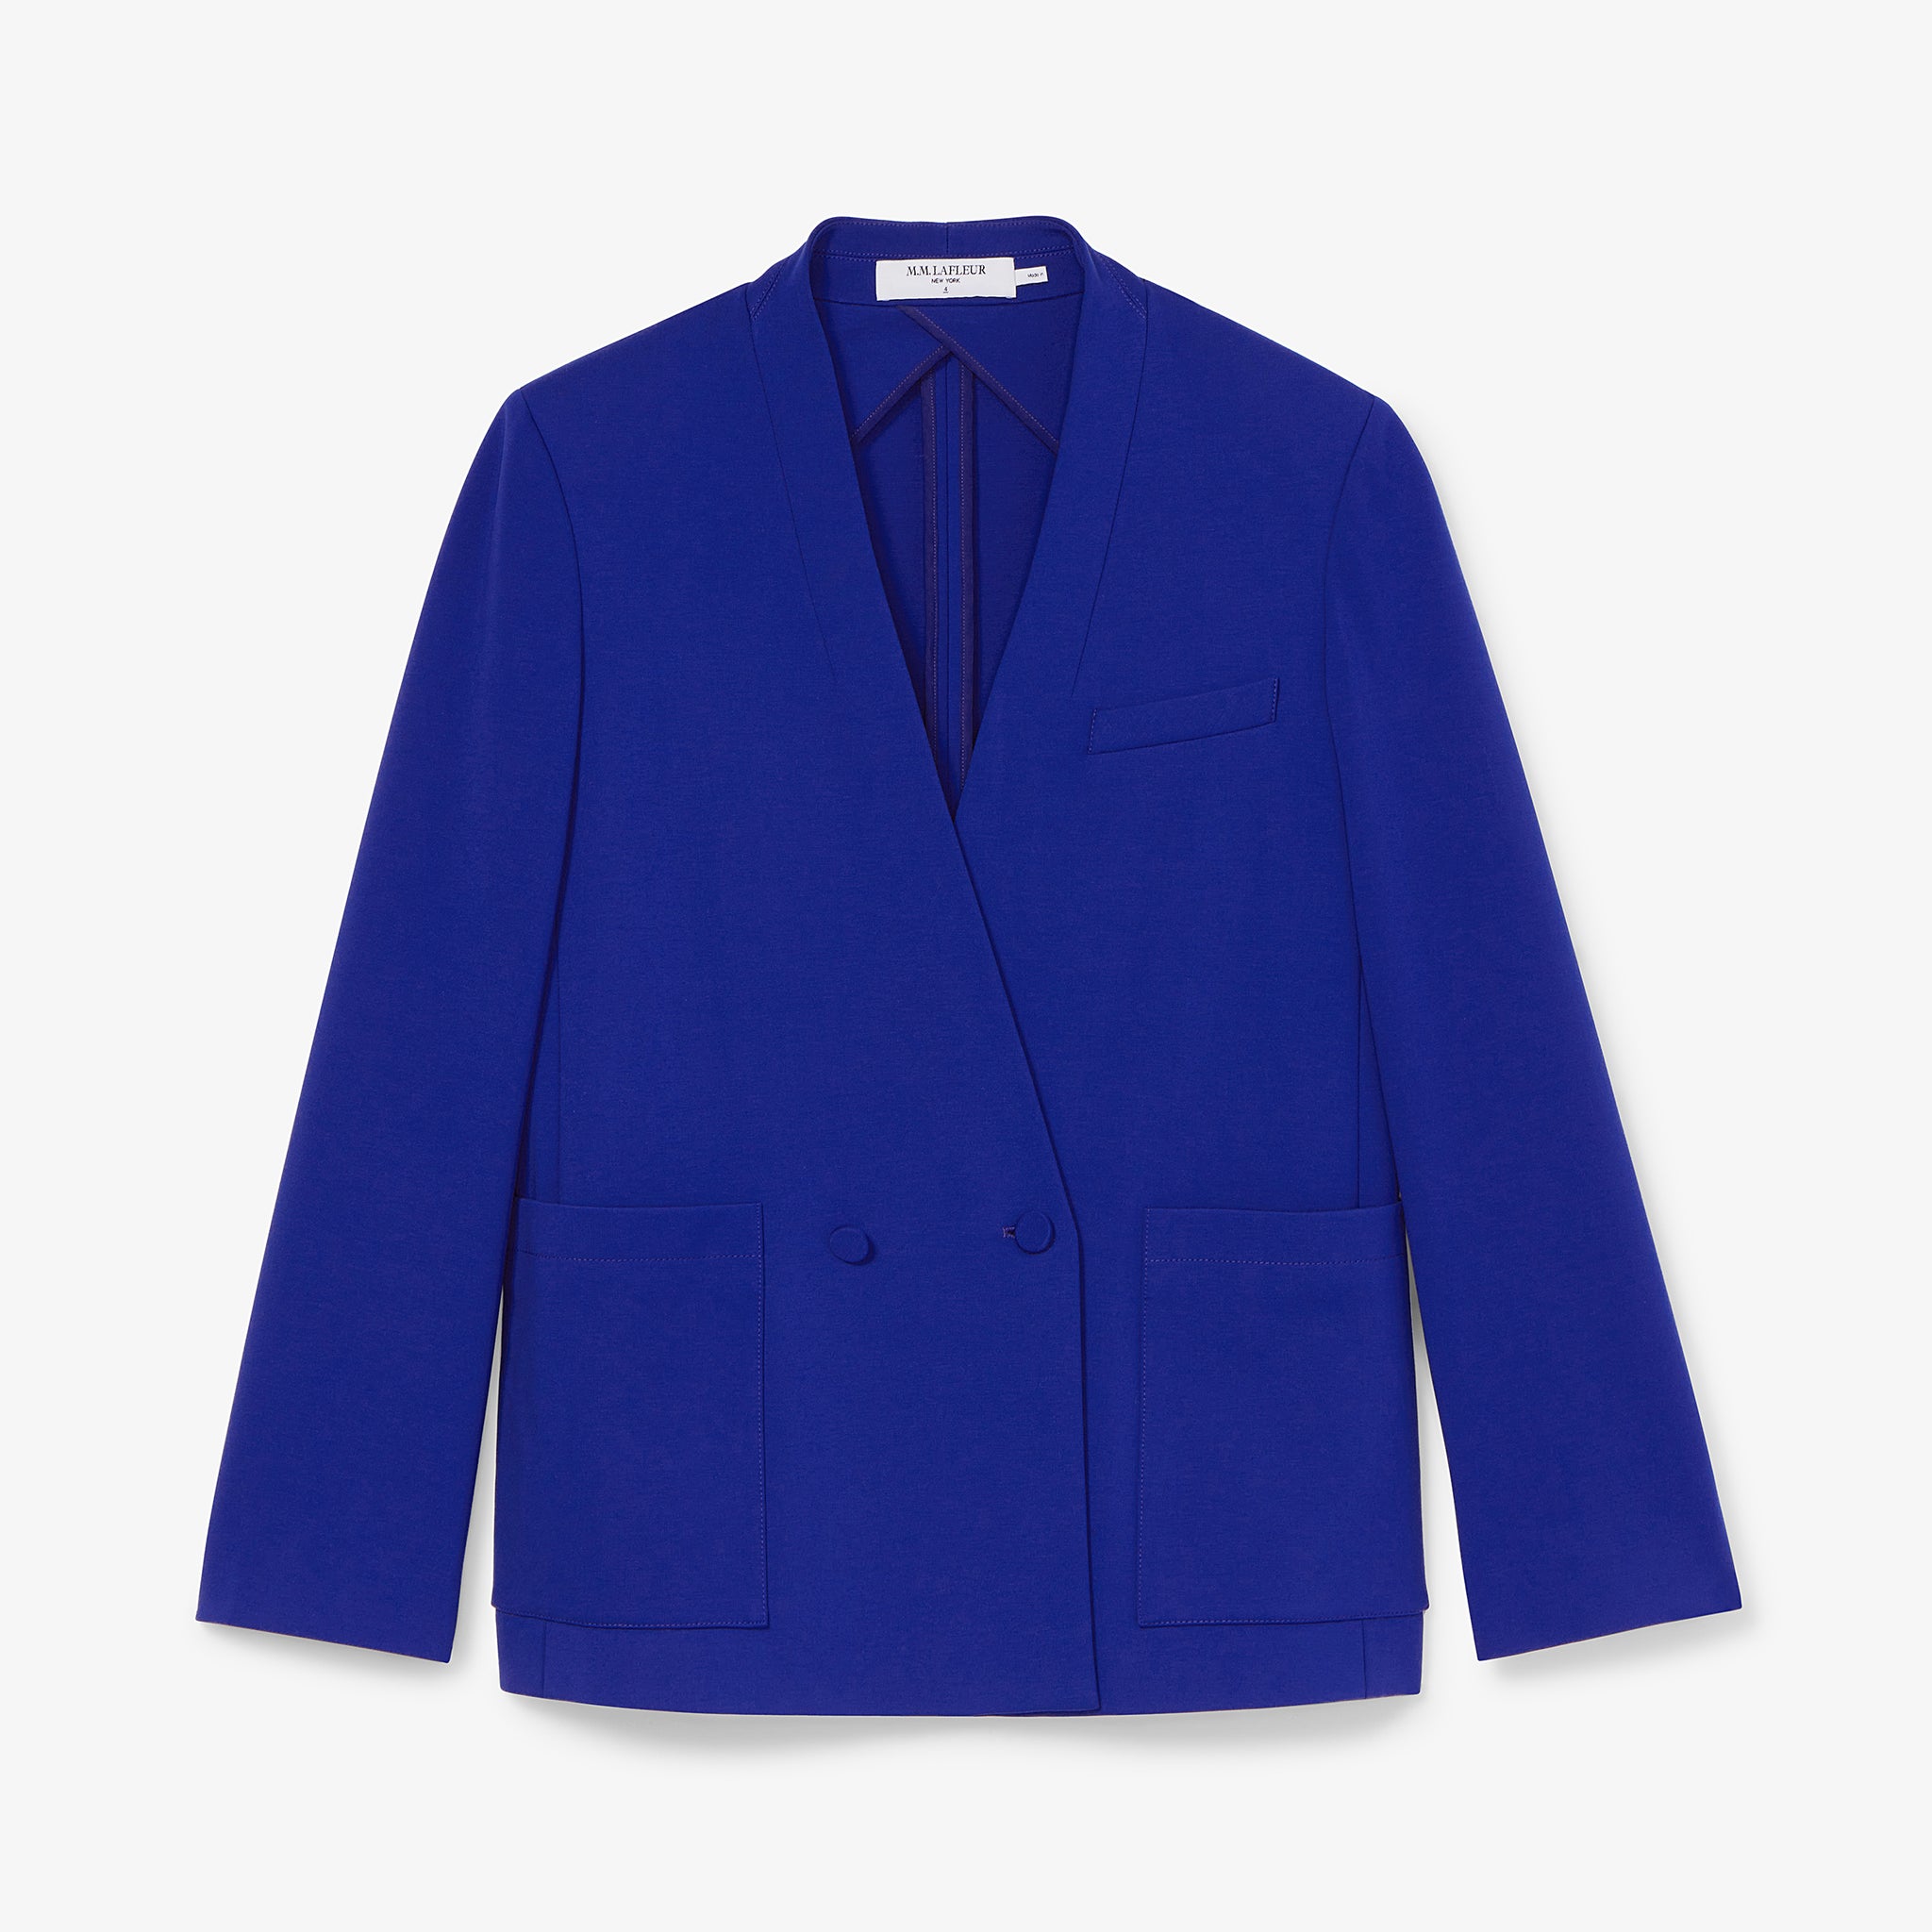 packshot image of the janette jacket in electric blue